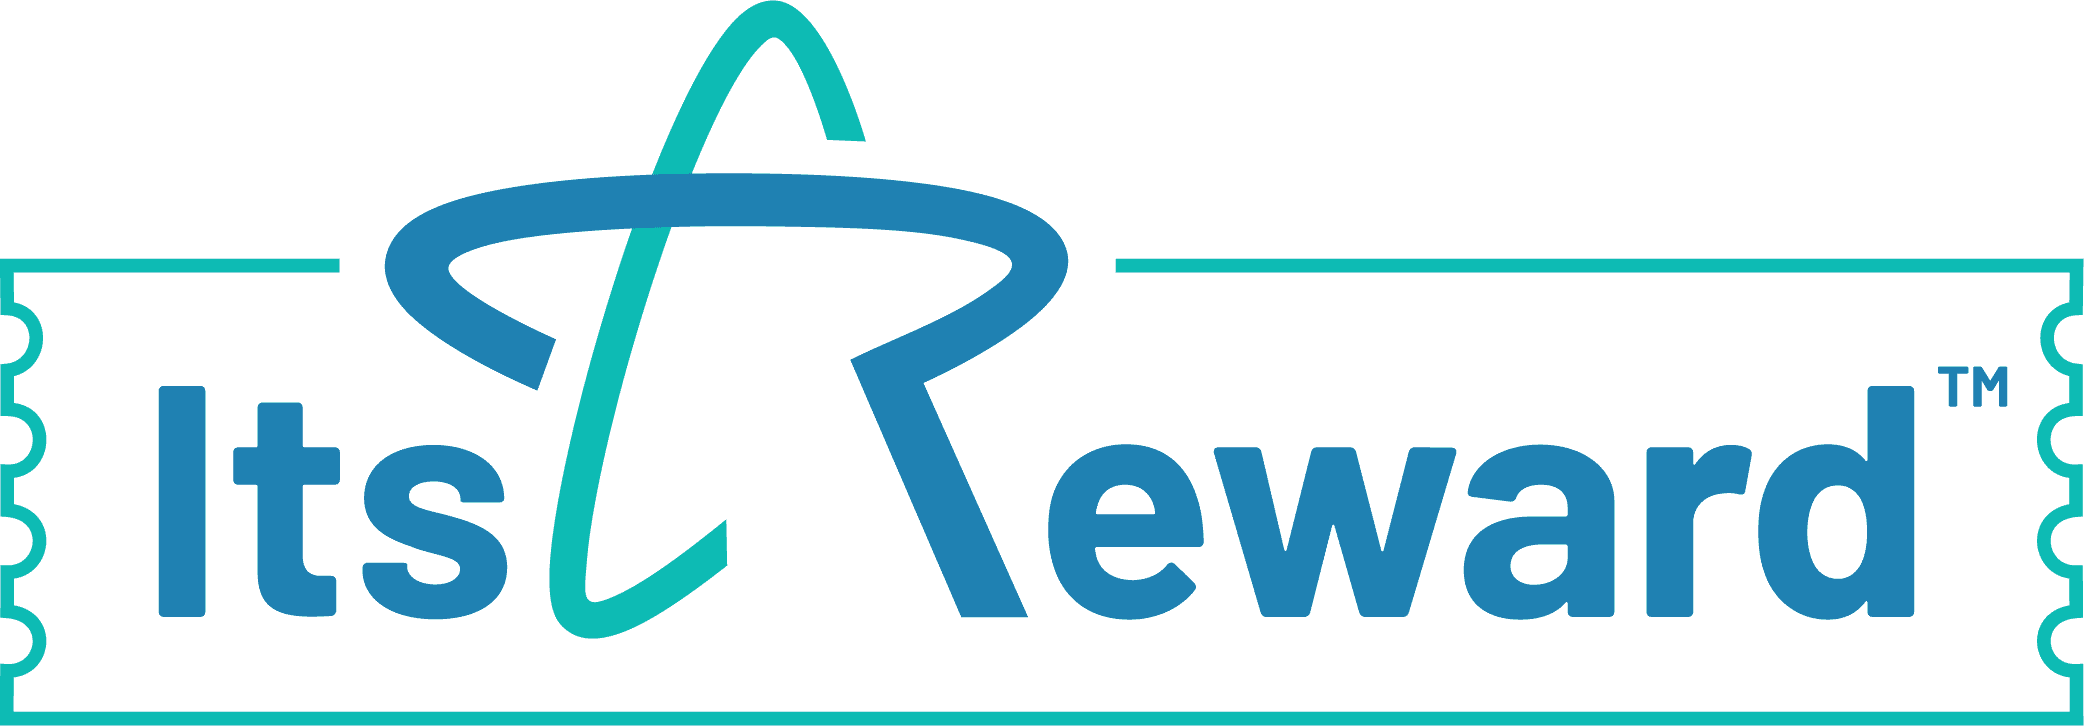 ItsReward Logo